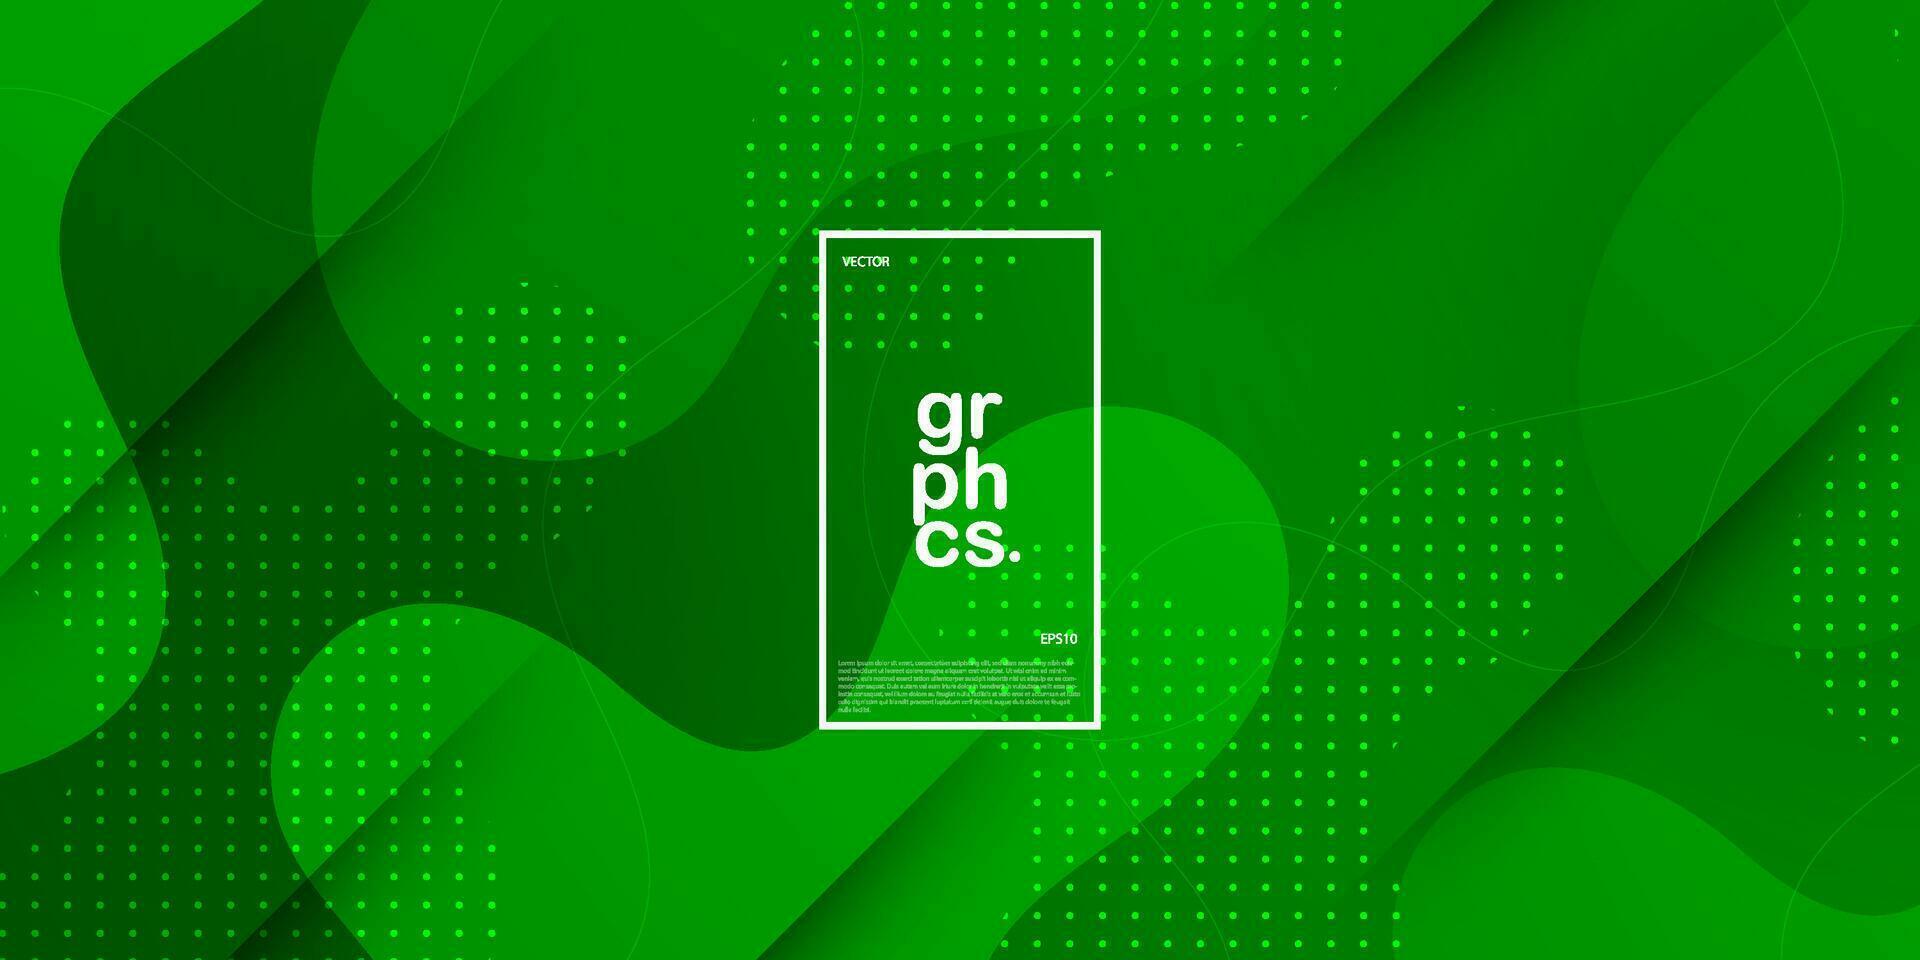 groen 3d achtergrond vloeistof vormen. futuristische groen solide kleur patroon. Golf achtergrond. abstract folder. kleurrijk meetkundig poster achtergrond. eps10 vector